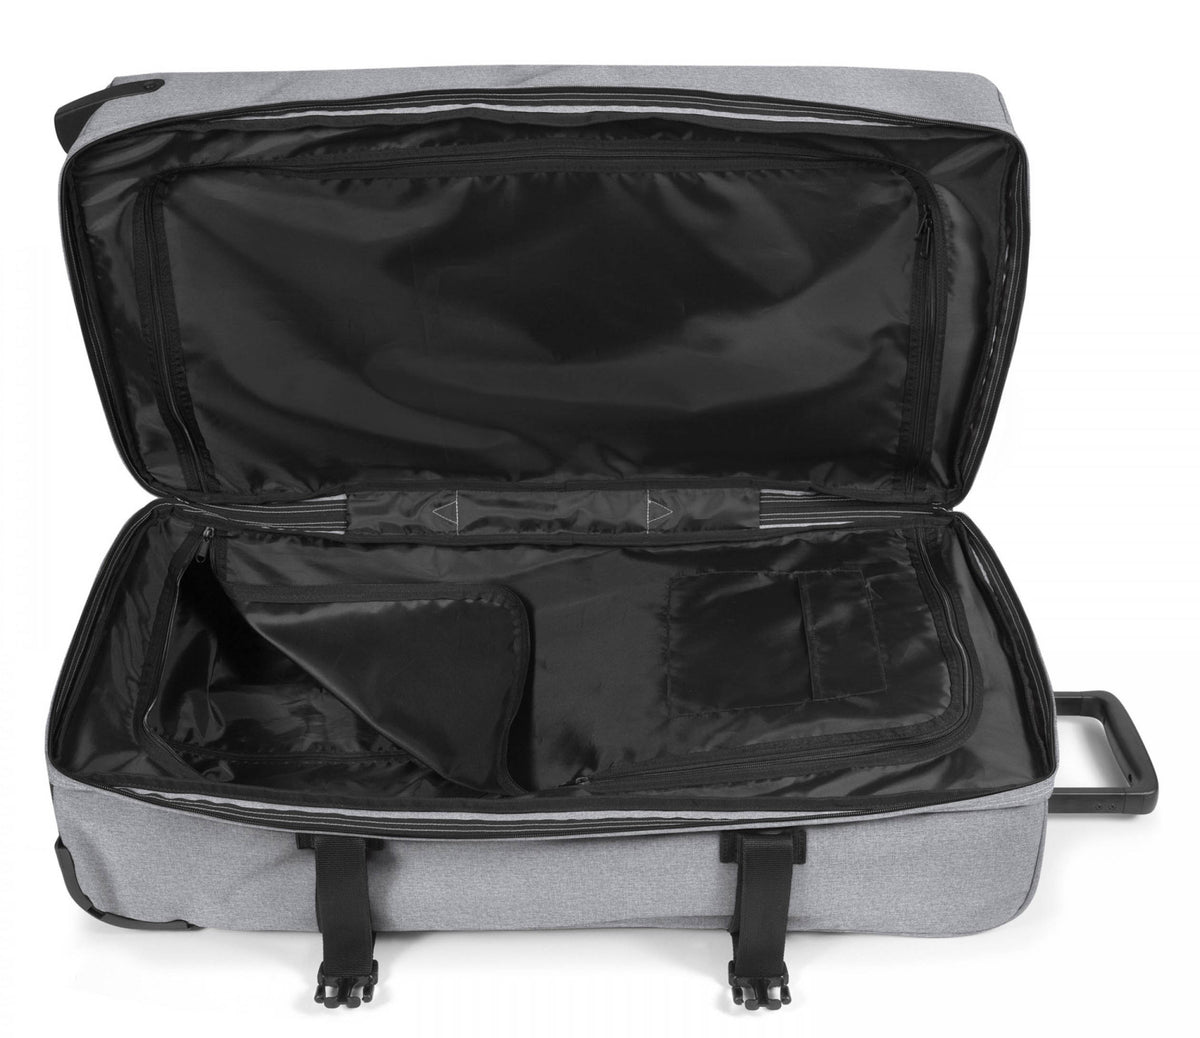 Eastpak Tranverz L Suitcase - Sunday Grey